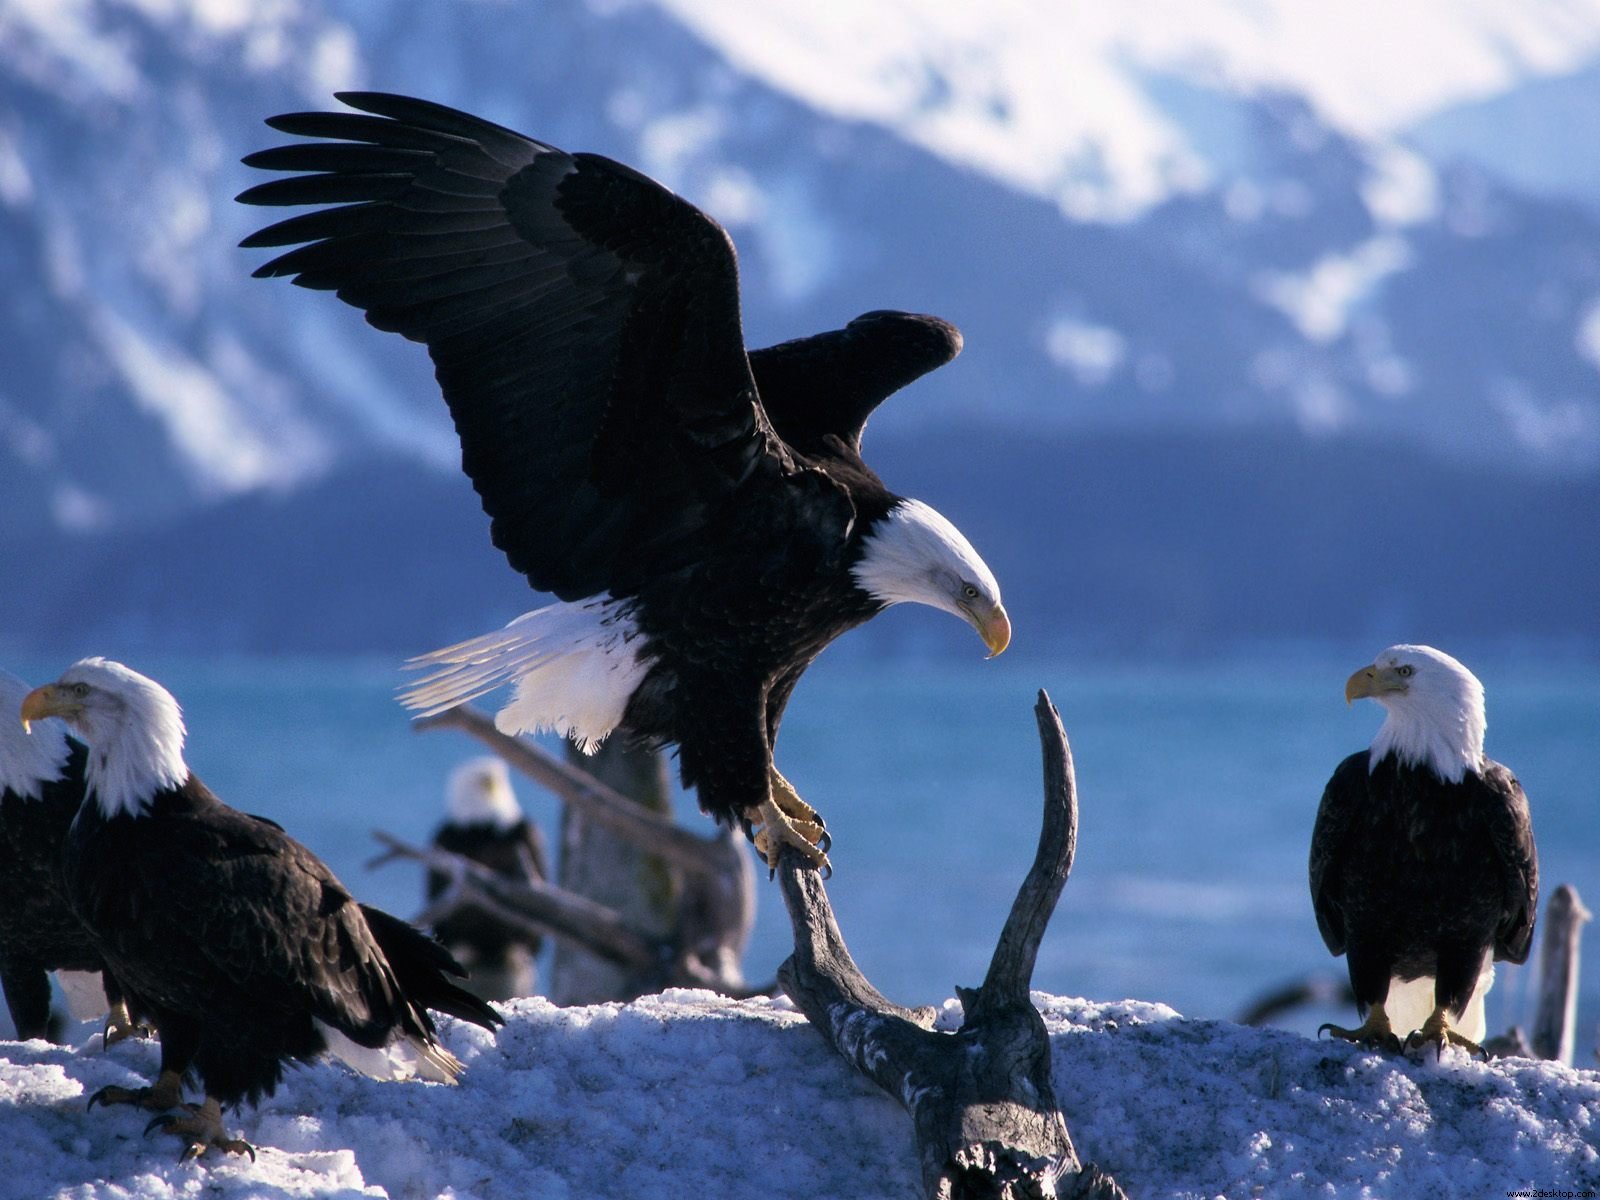 Mobile Desktop Background Hd Cool Pictures Of Eagles